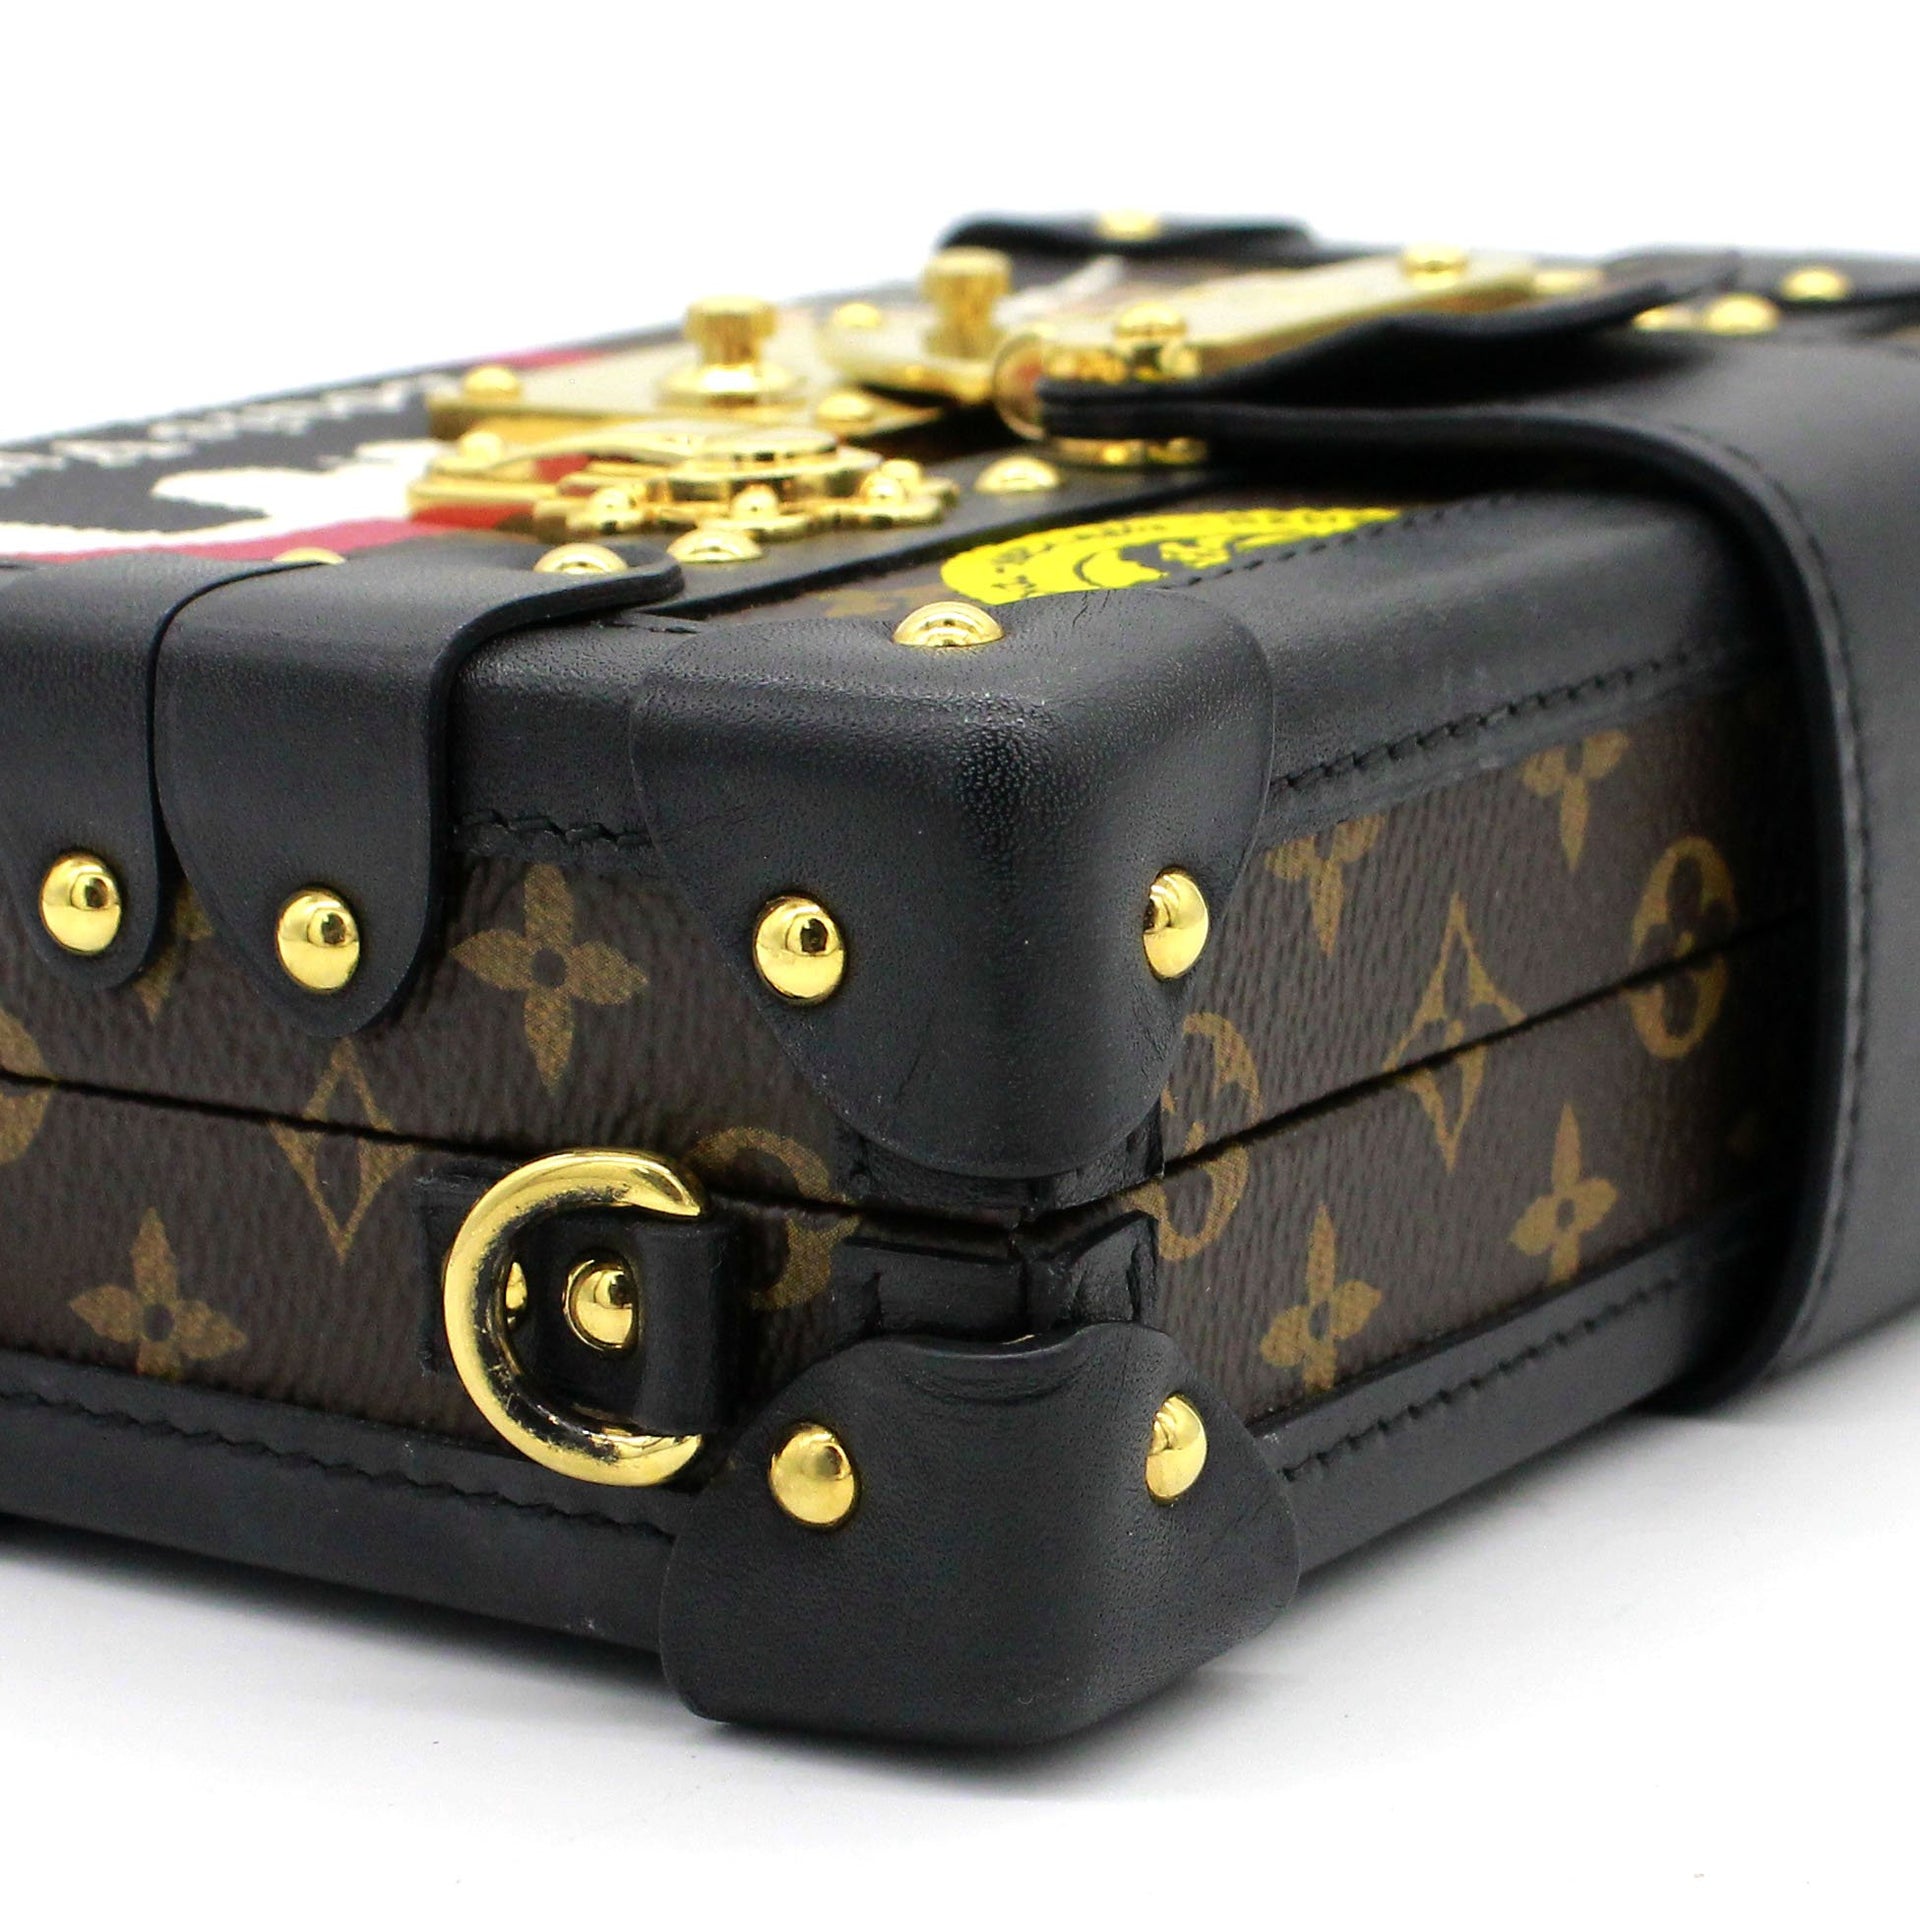 Louis Vuitton Limited Edition Leather World Tour Petite Malle Bag